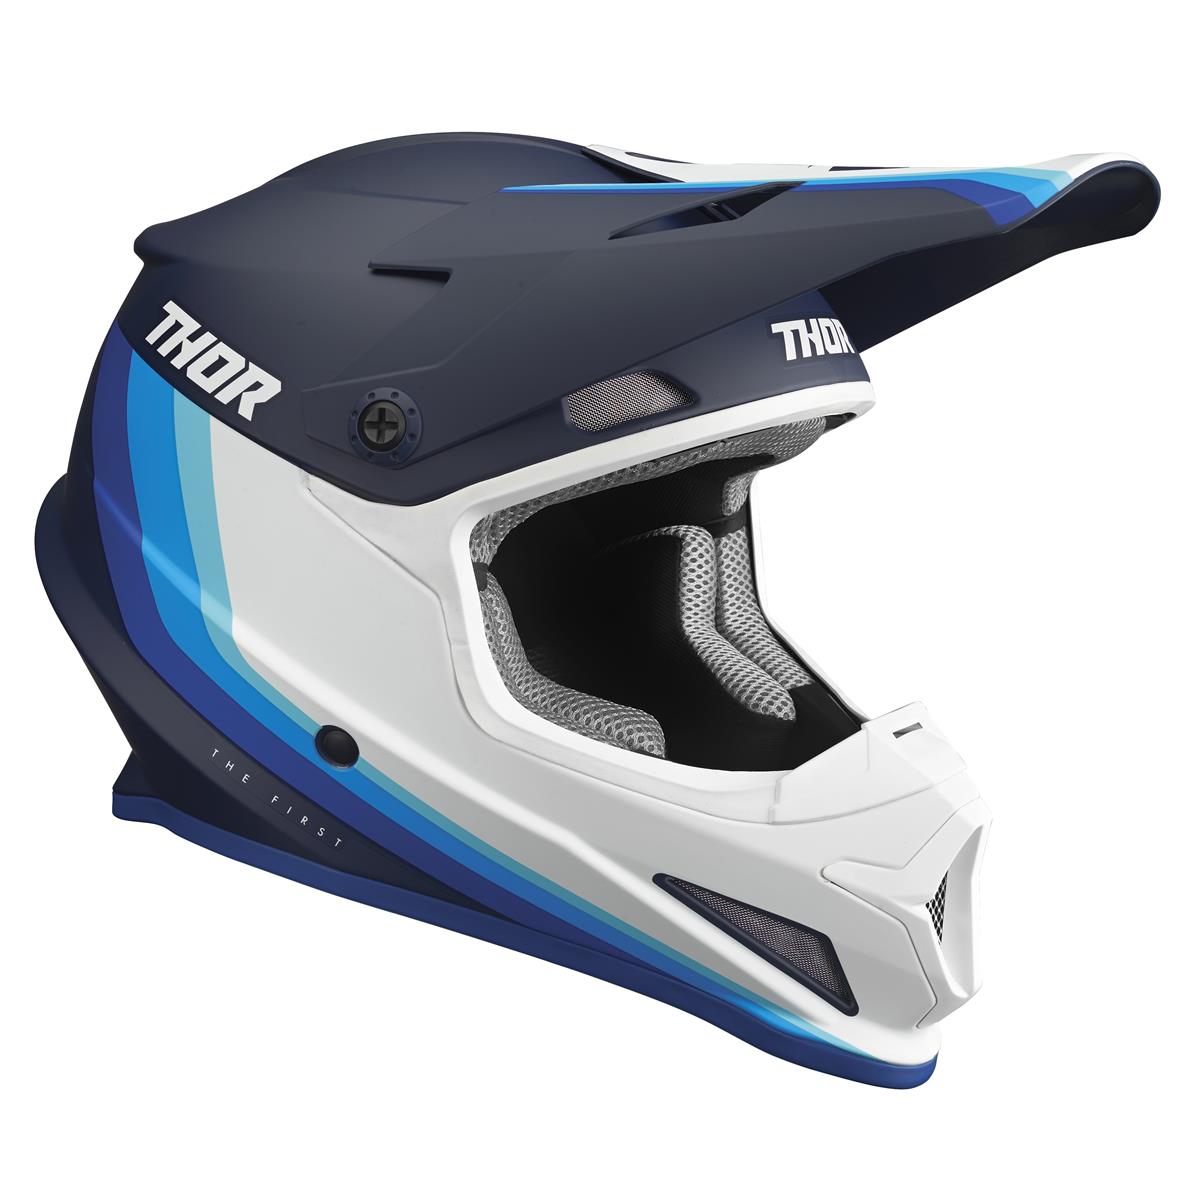 Thor MX Sector Racer Motocross Helm navy blau